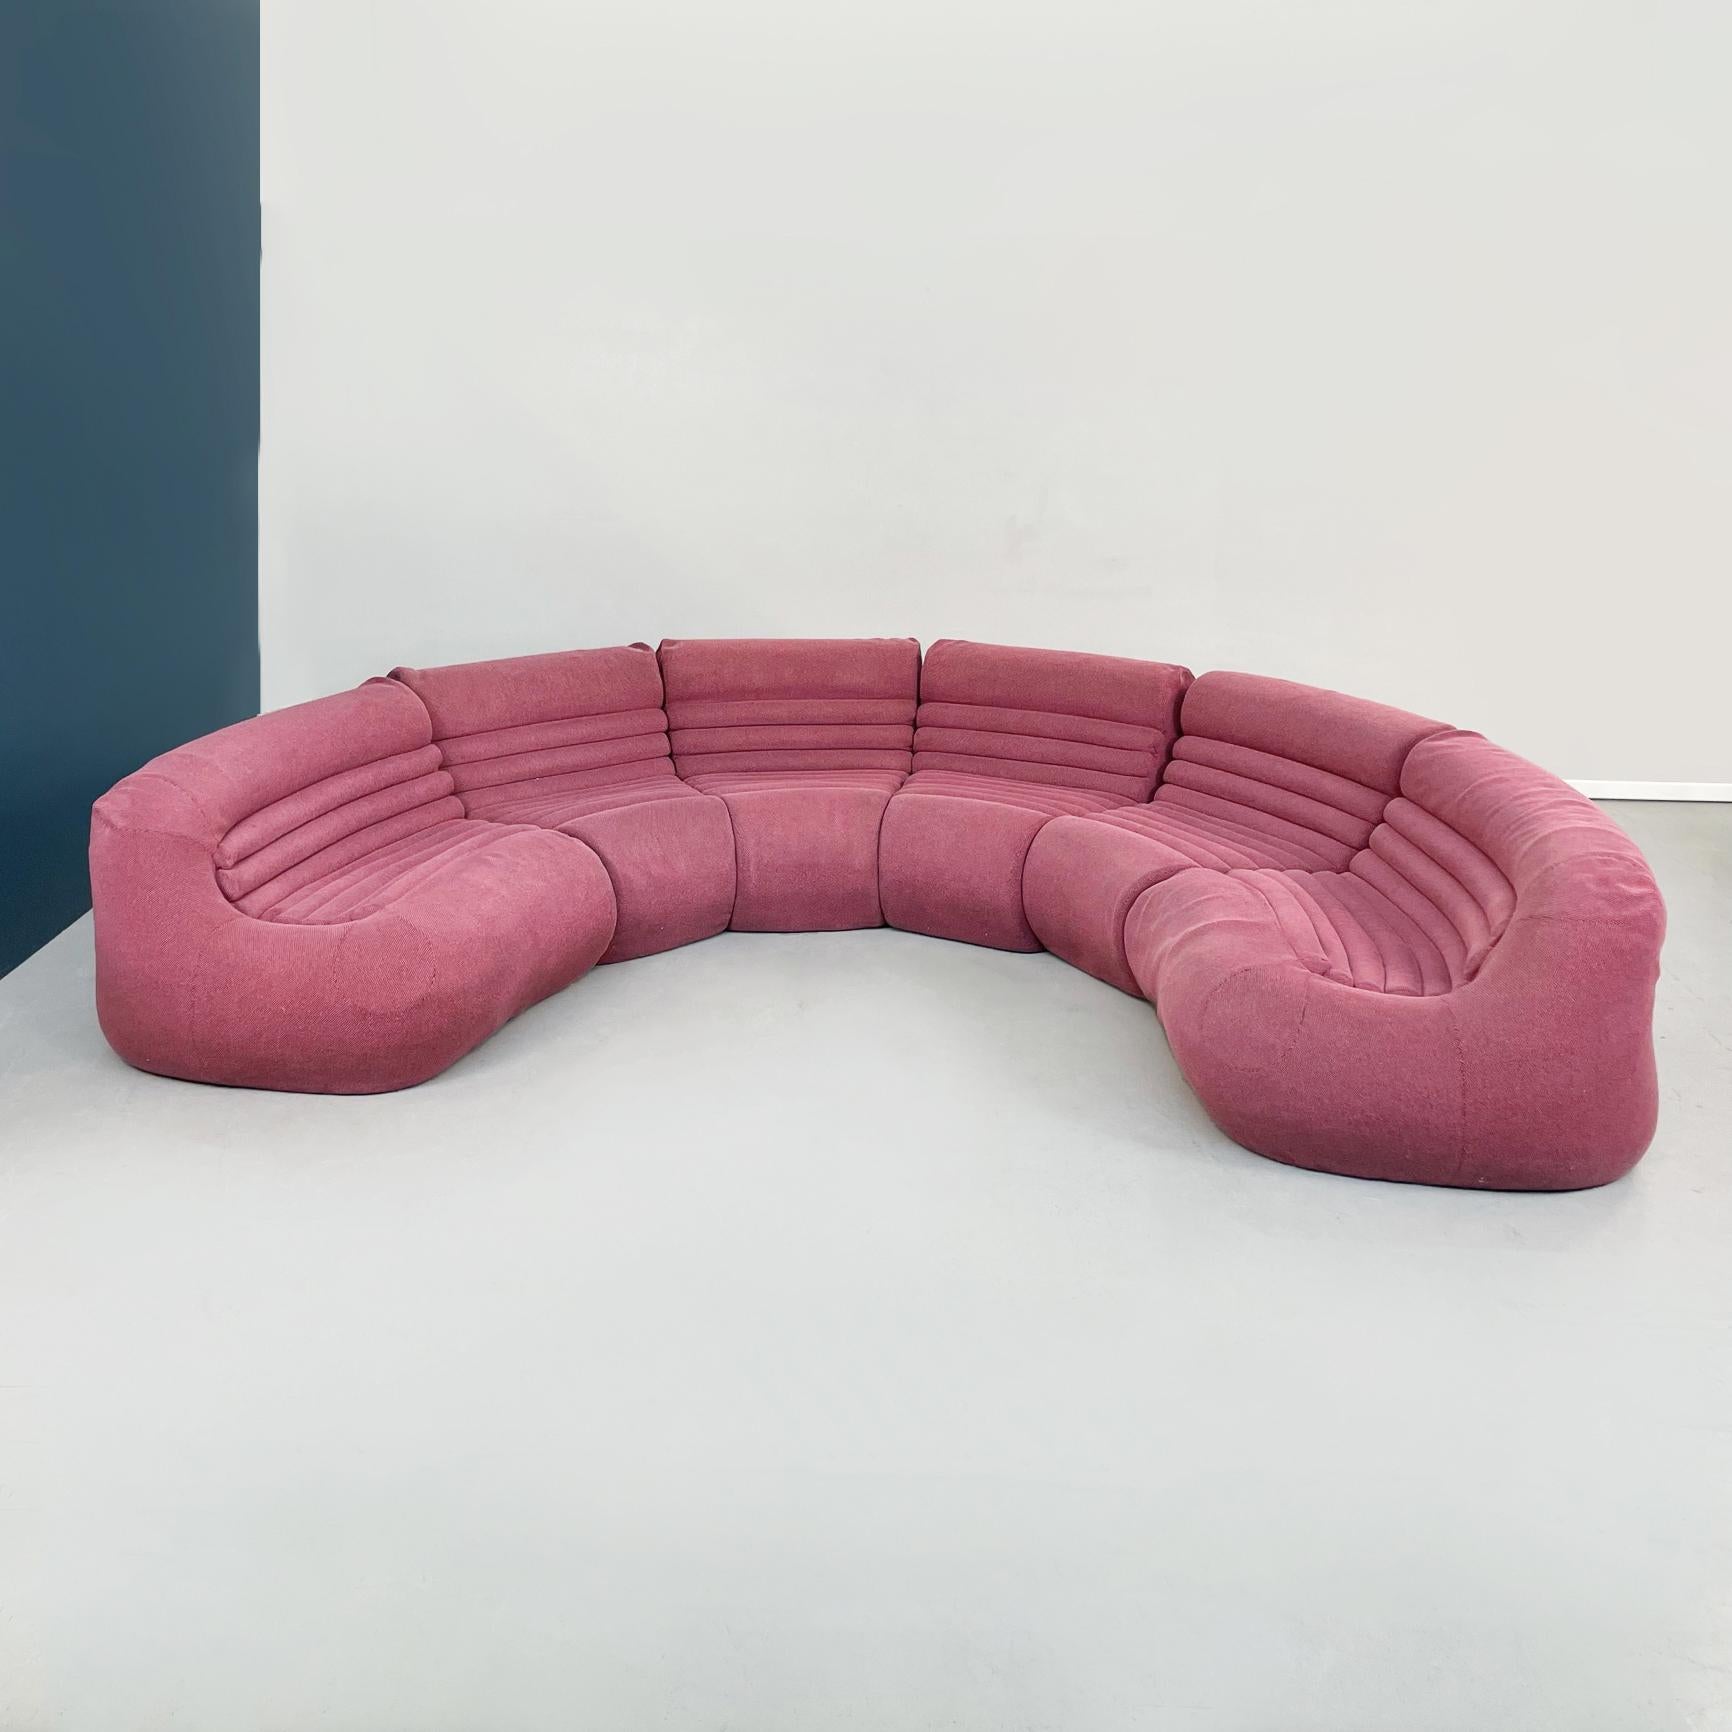 Italian Carrera modular sofa De Pas, D’urbino and Lomazzi for BBB Bonacina, 1970s
Carrera modular sofa in the shape of a semicircle, composed of 6 modules. The sofa features polyurethane foam padding and a purple / burgundy coarse-woven cotton